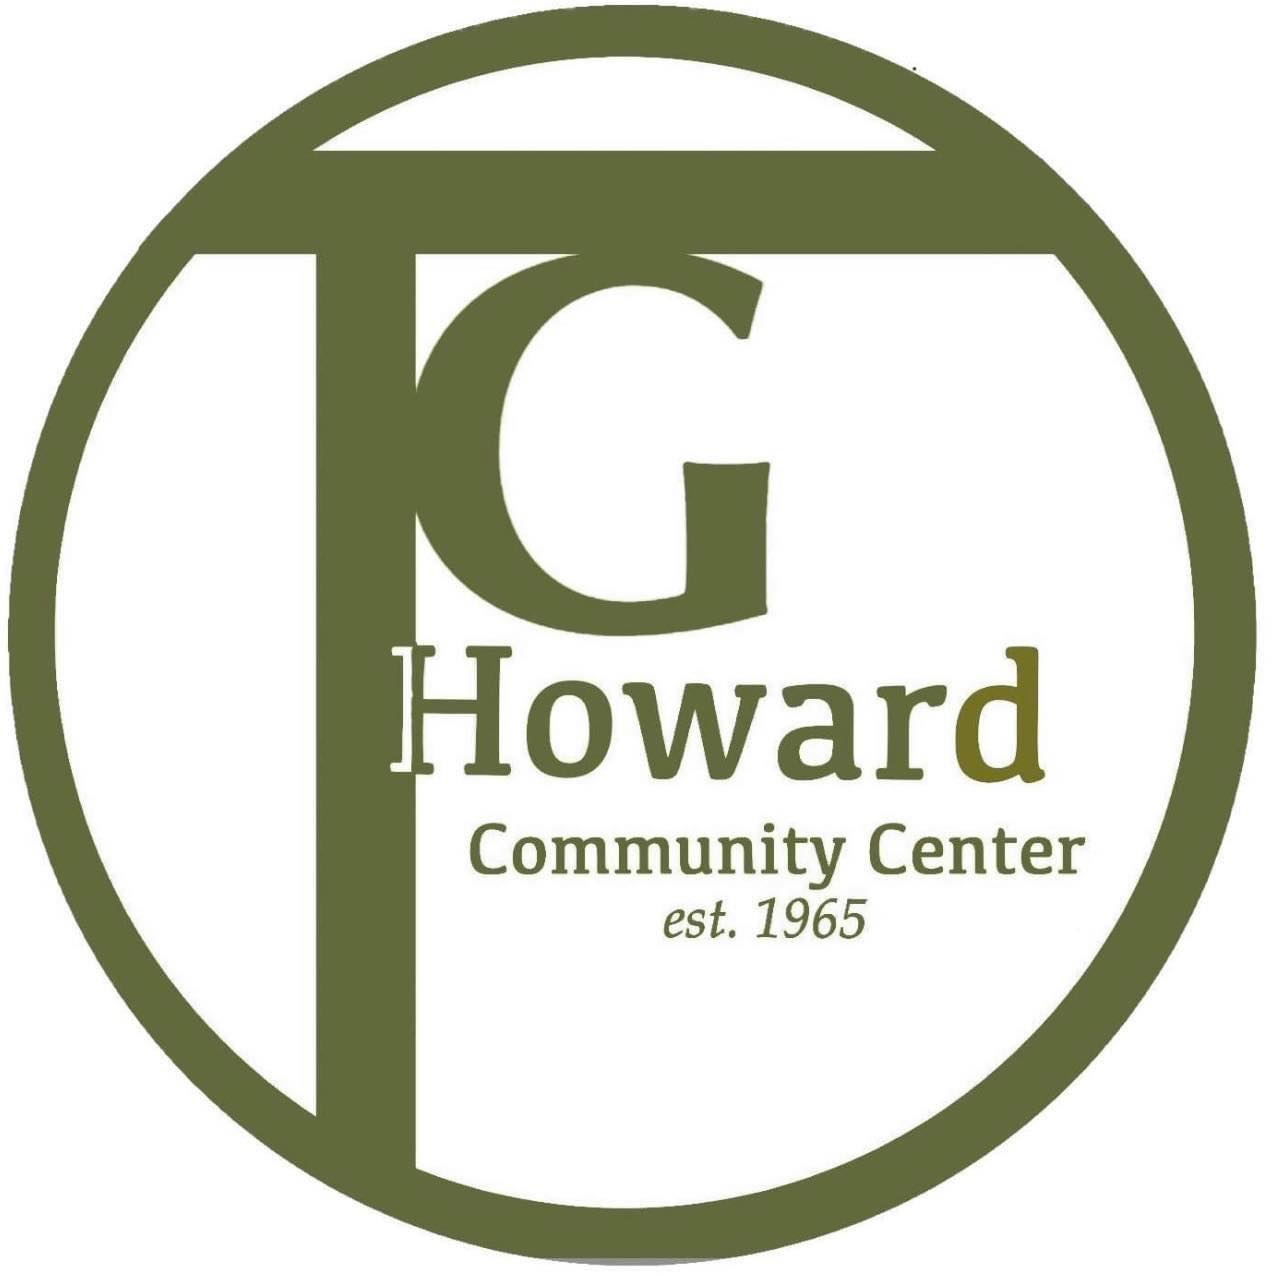 TG Howard Community Center